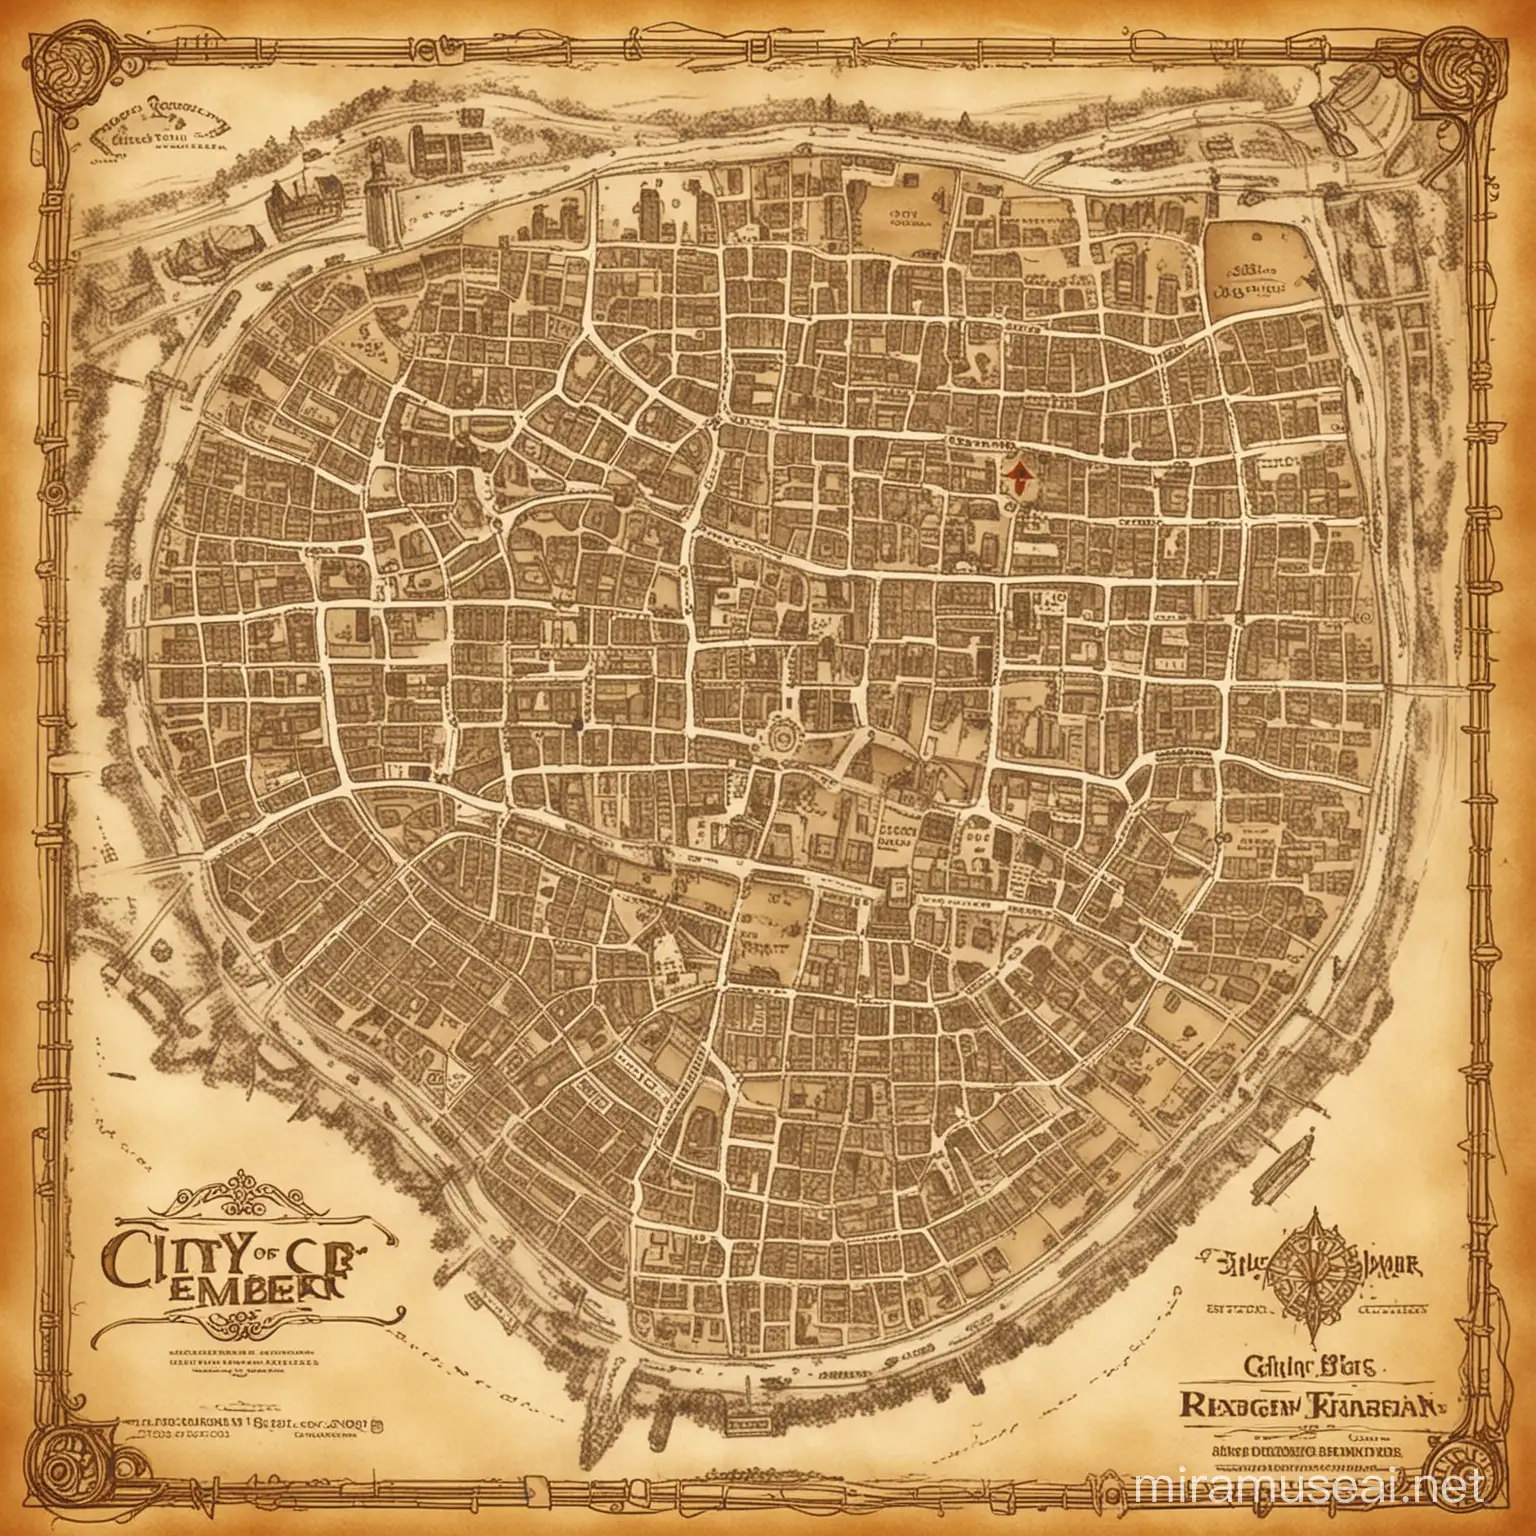 Detailed City of Ember Street Map Illustration for Navigation Guide